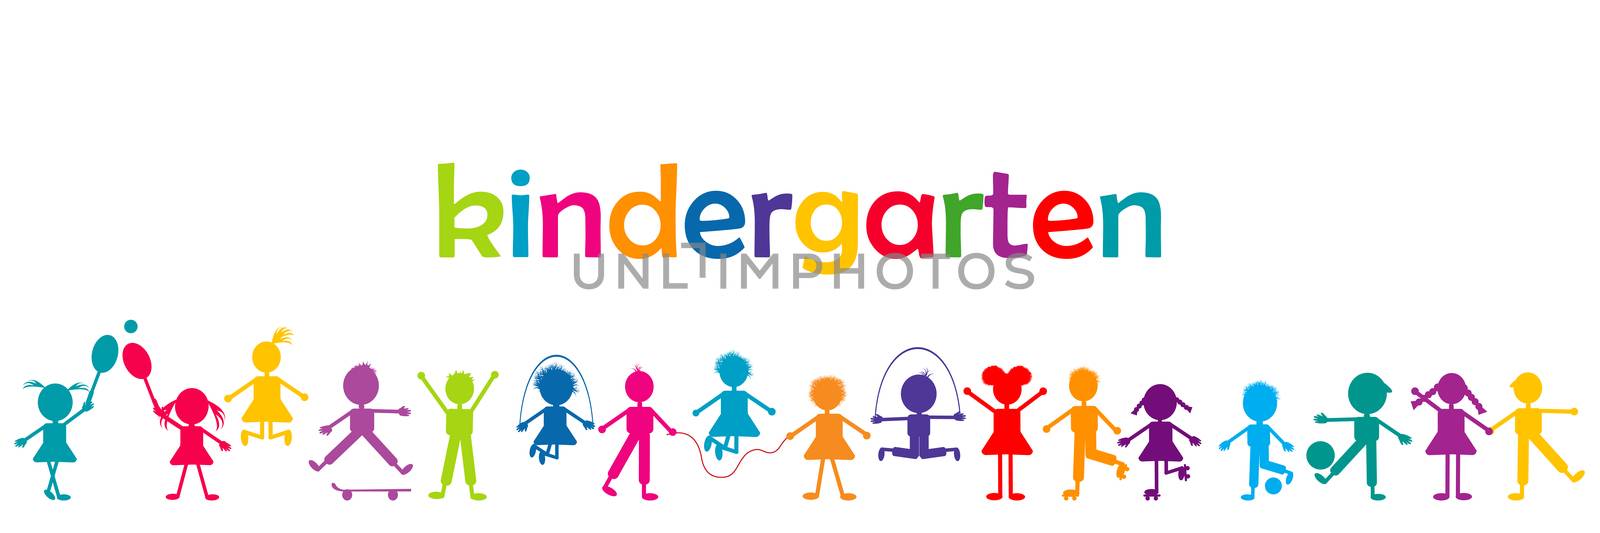 Kindergarten banner with colored kids by hibrida13